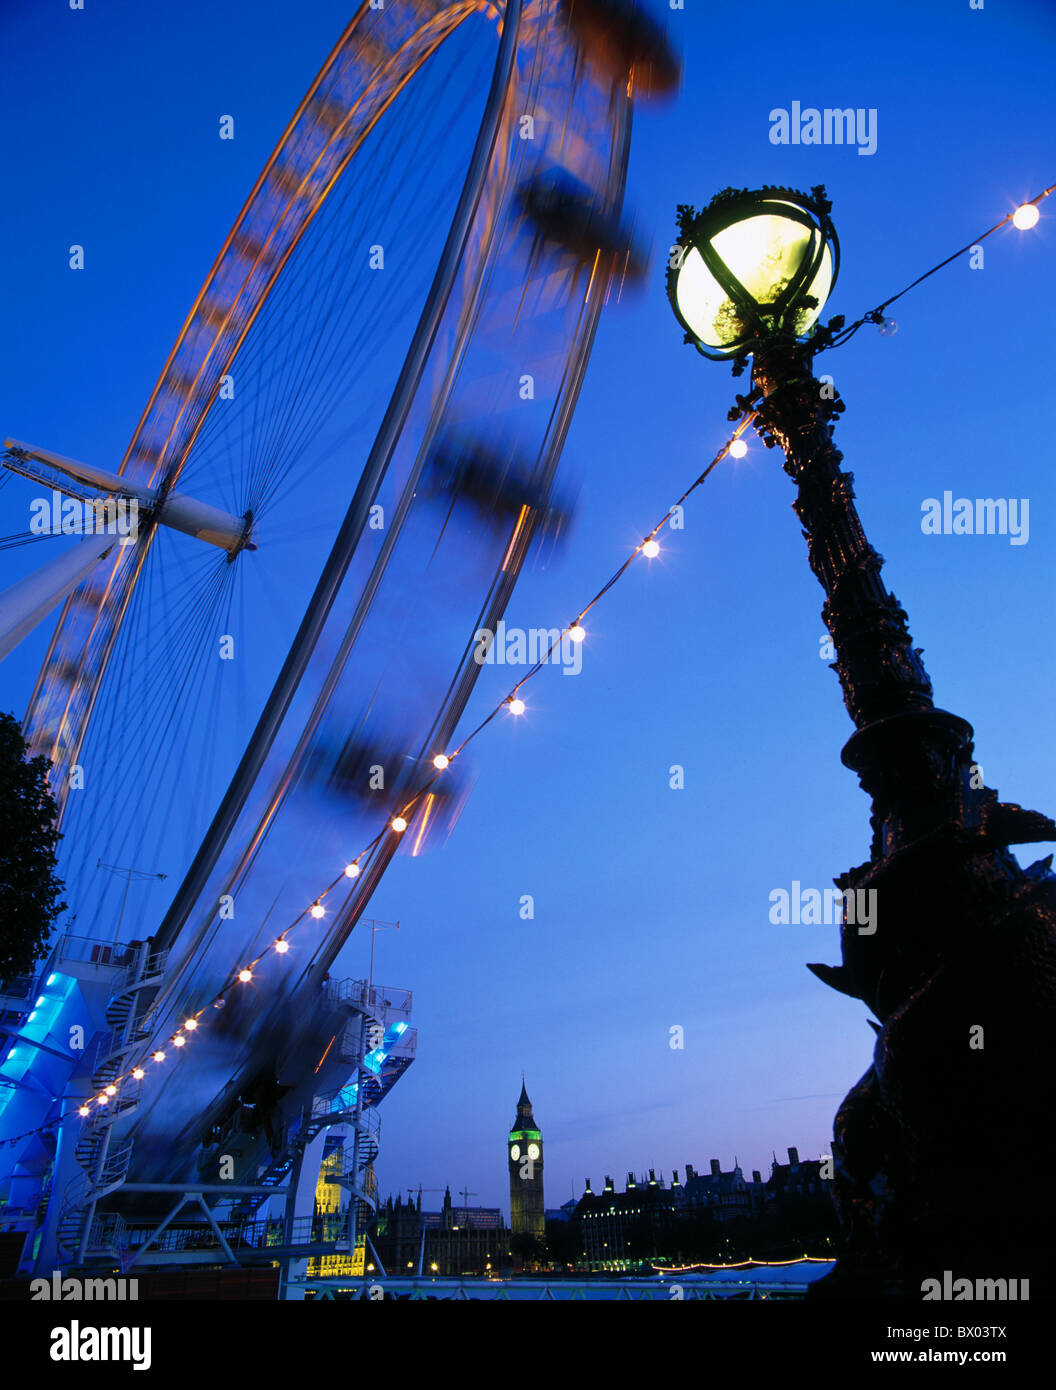 Big Ben dusk twilight turn lantern London Great Britain England Europe London Eye millennium Wheel big di Stock Photo